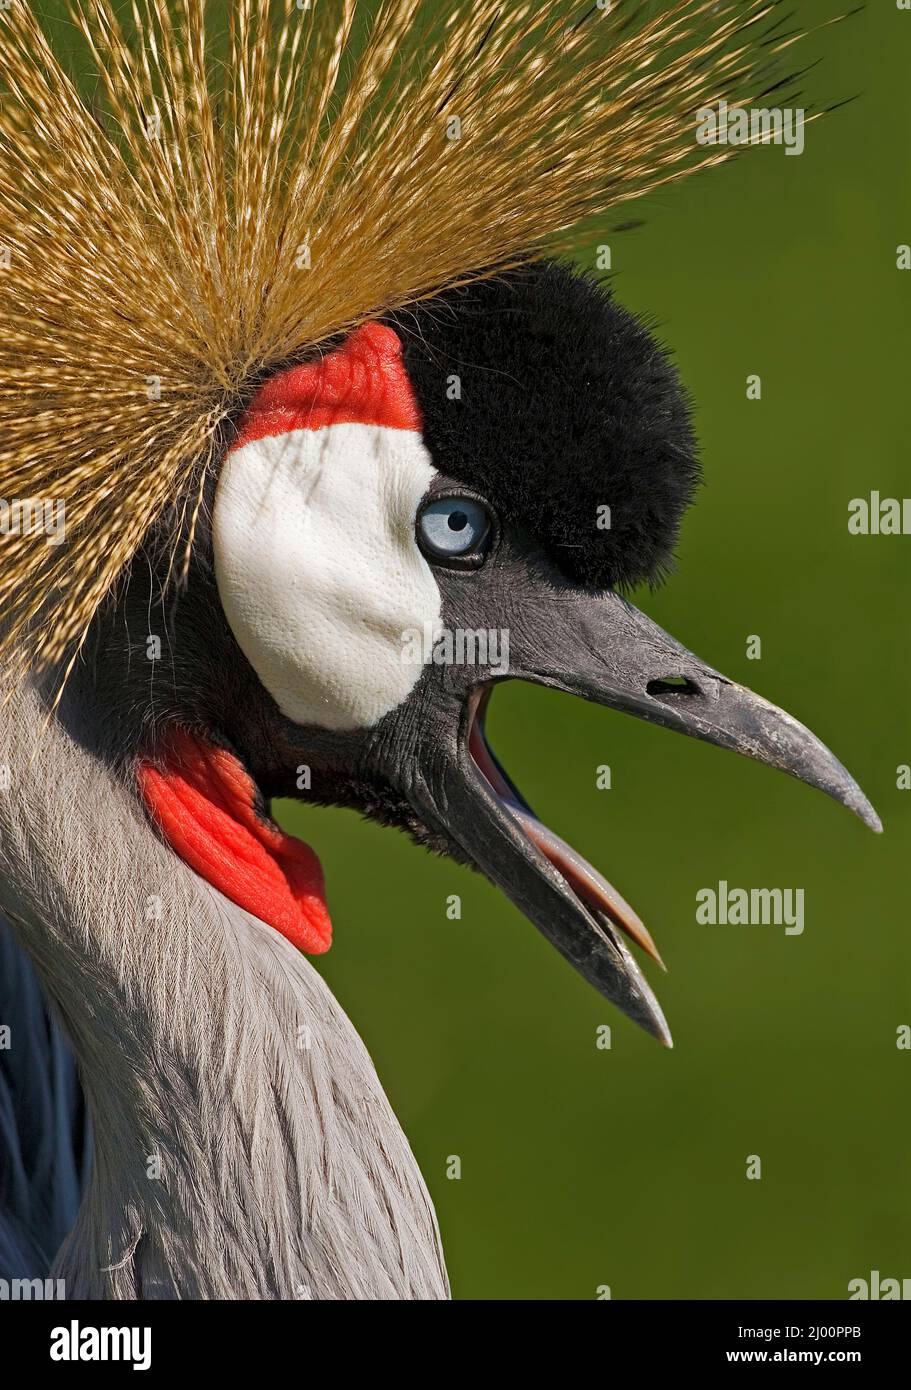 A Close up of a Gray-crowned Crane, Balearica regulorum Stock Photo